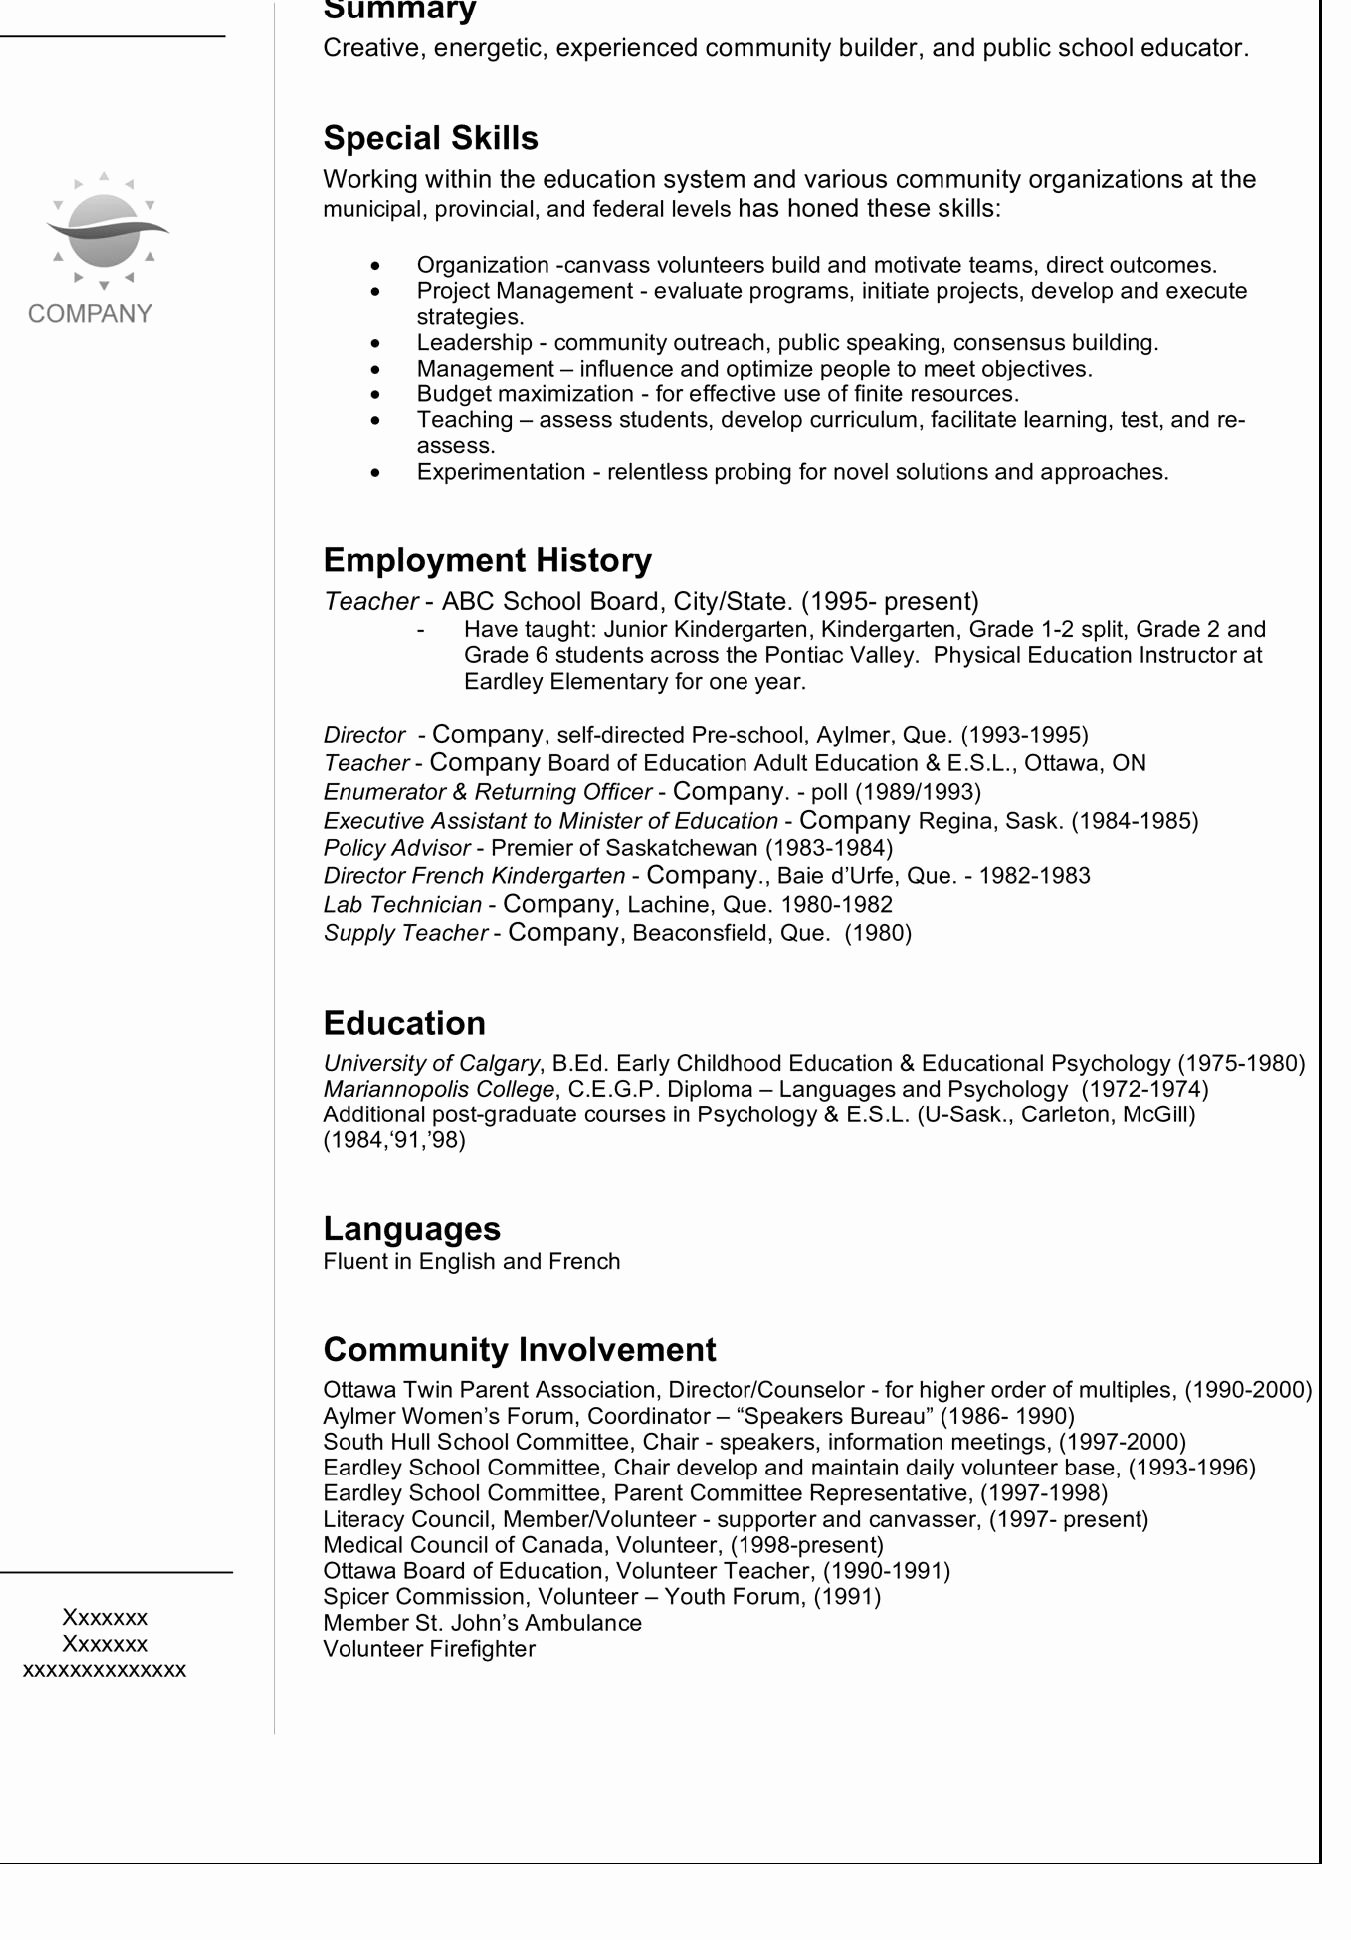 Need Help to Write My Resume